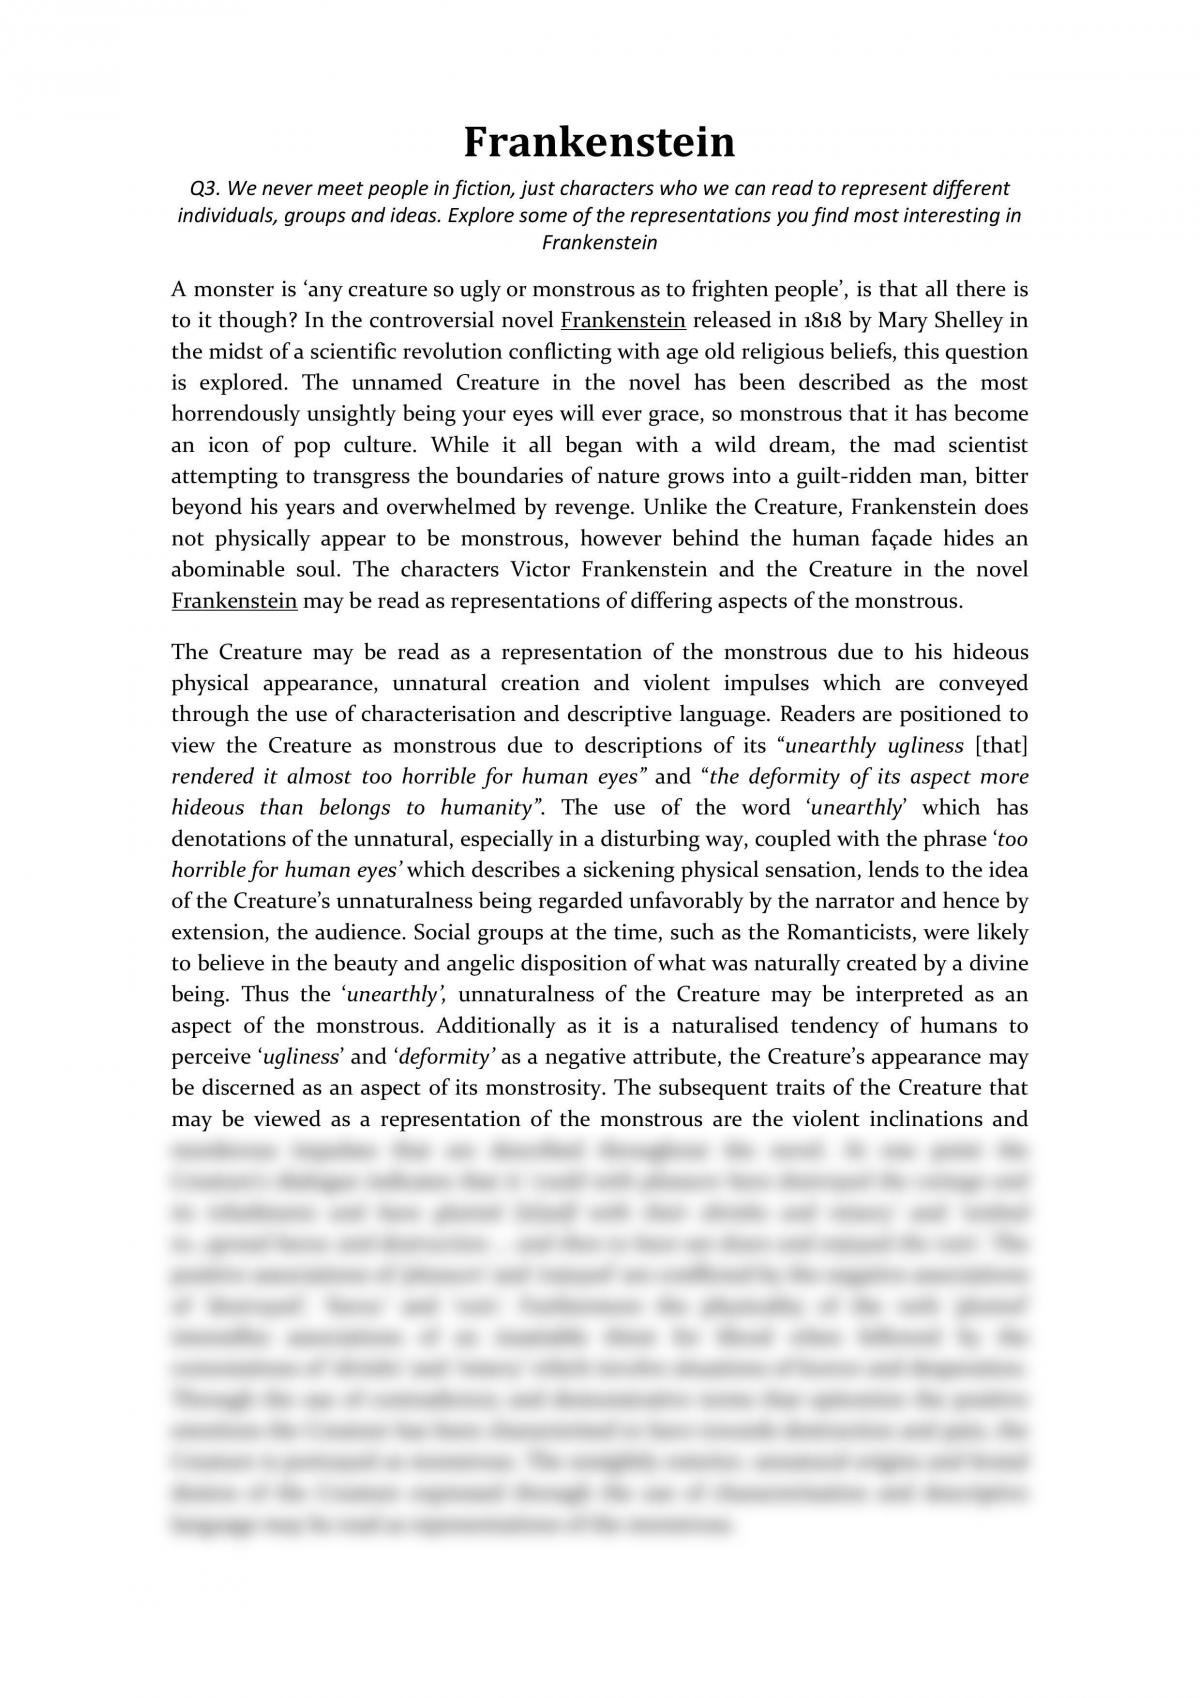 research paper on frankenstein